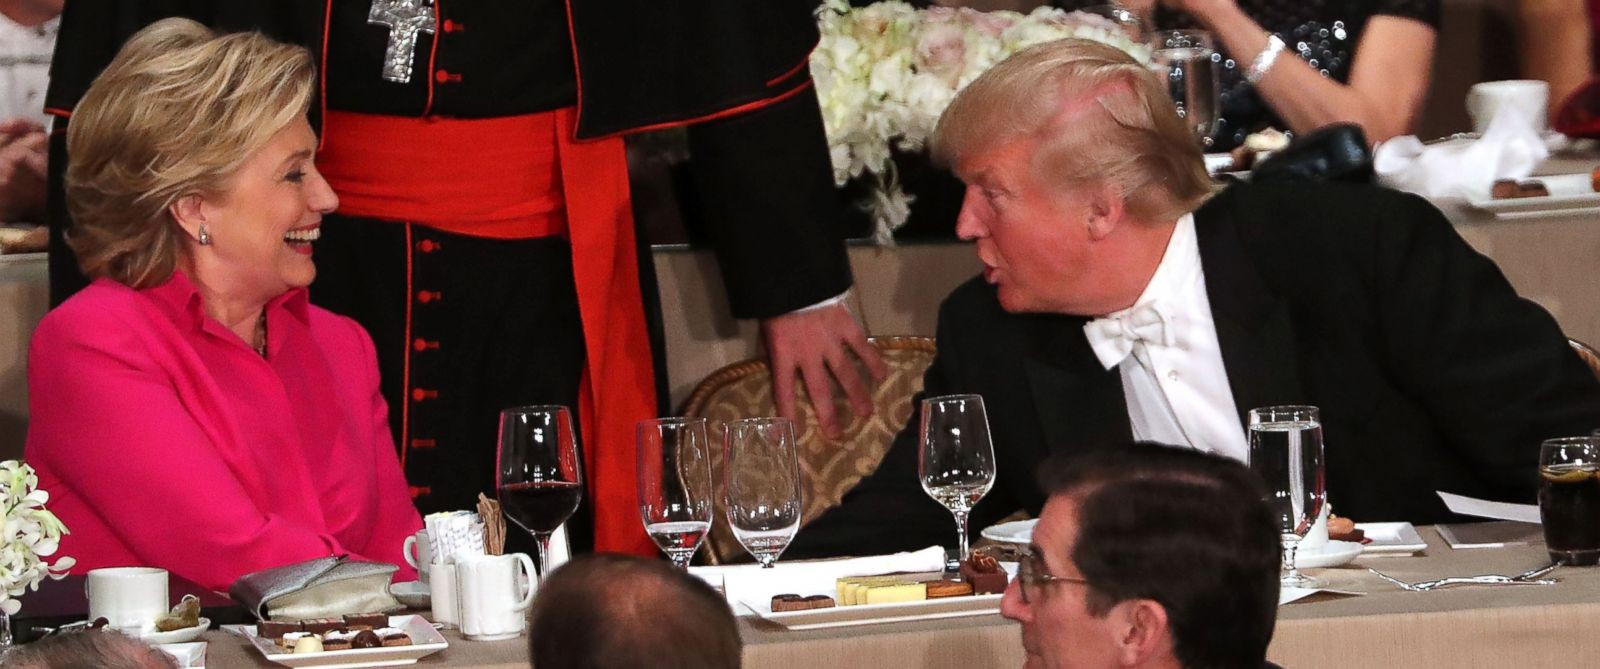 Donald Trump Al Smith Dinner
 Donald Trump Gets Booed at Al Smith Dinner After Jabbing